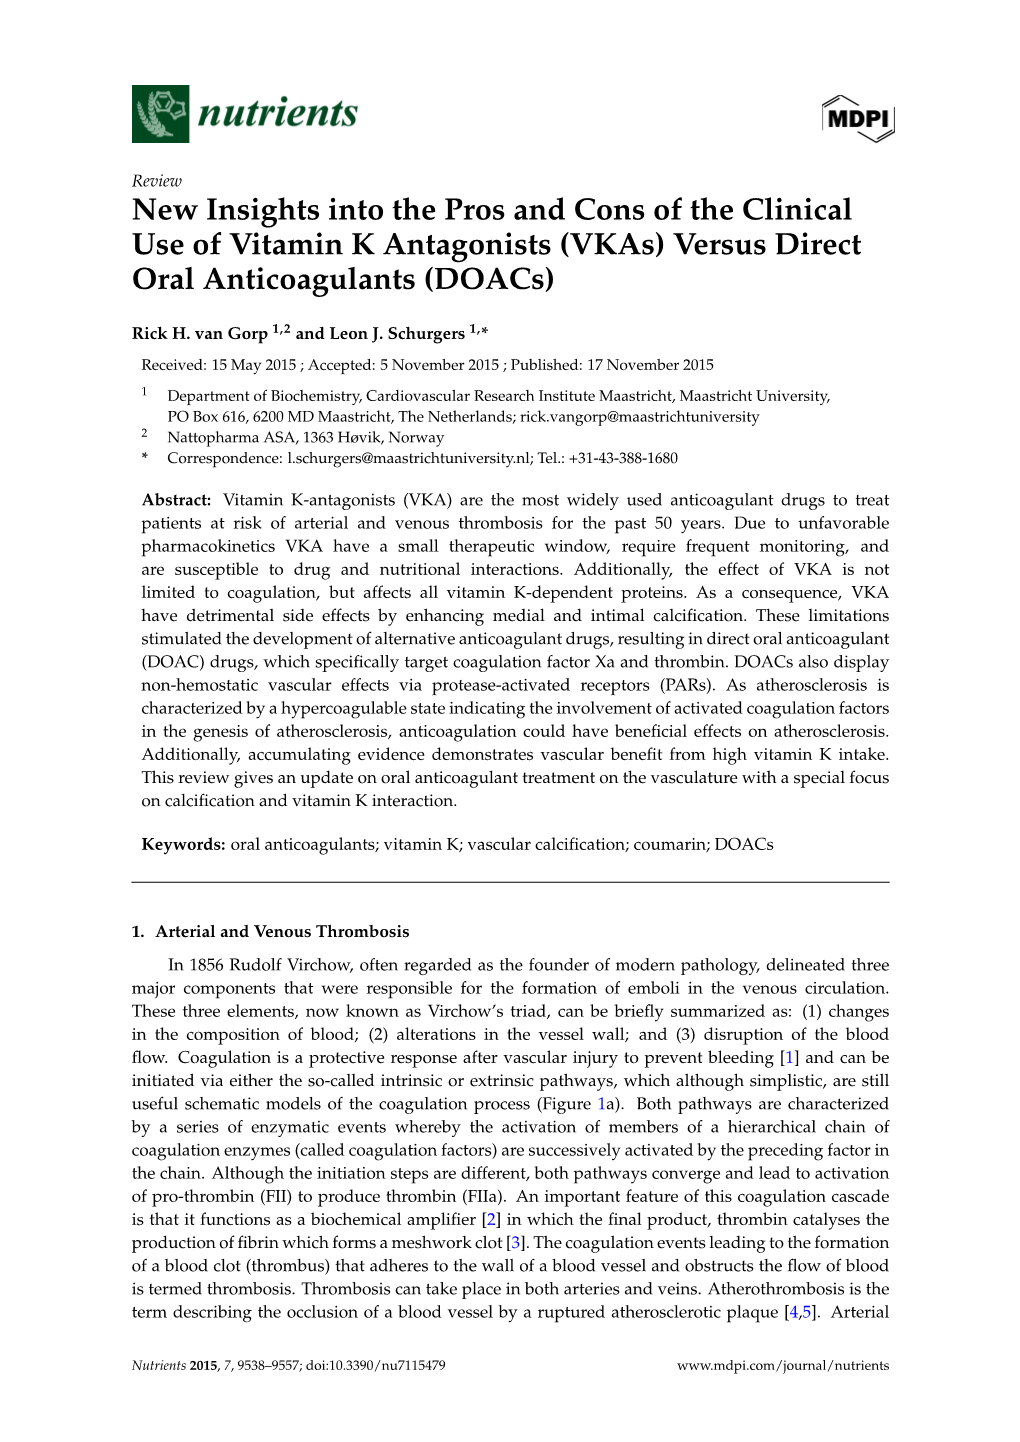 Vkas) Versus Direct Oral Anticoagulants (Doacs